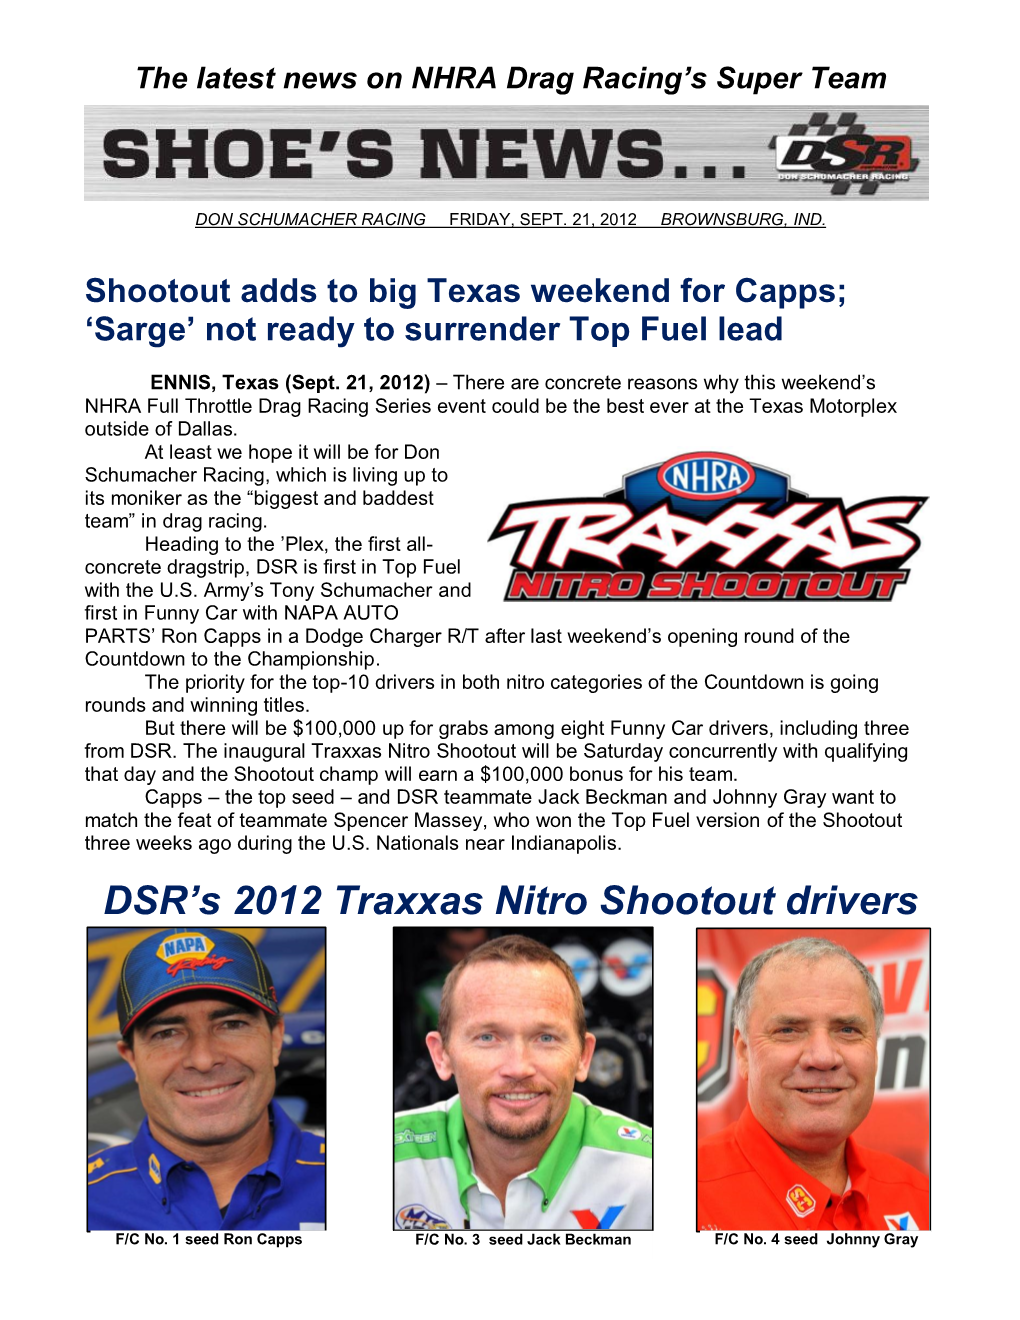 DSR's 2012 Traxxas Nitro Shootout Drivers